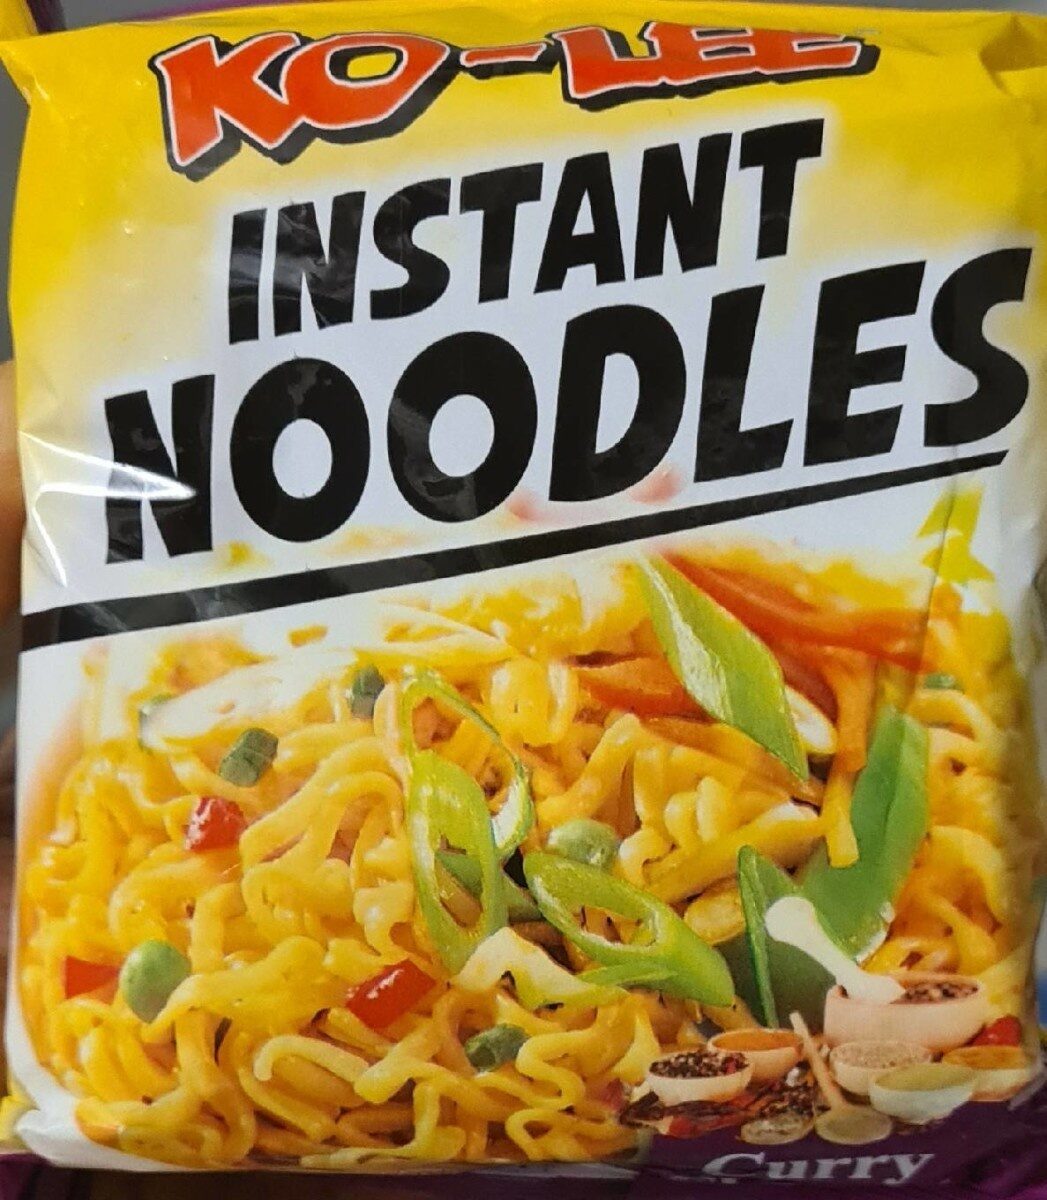 Instant noodles curry flavour - Product